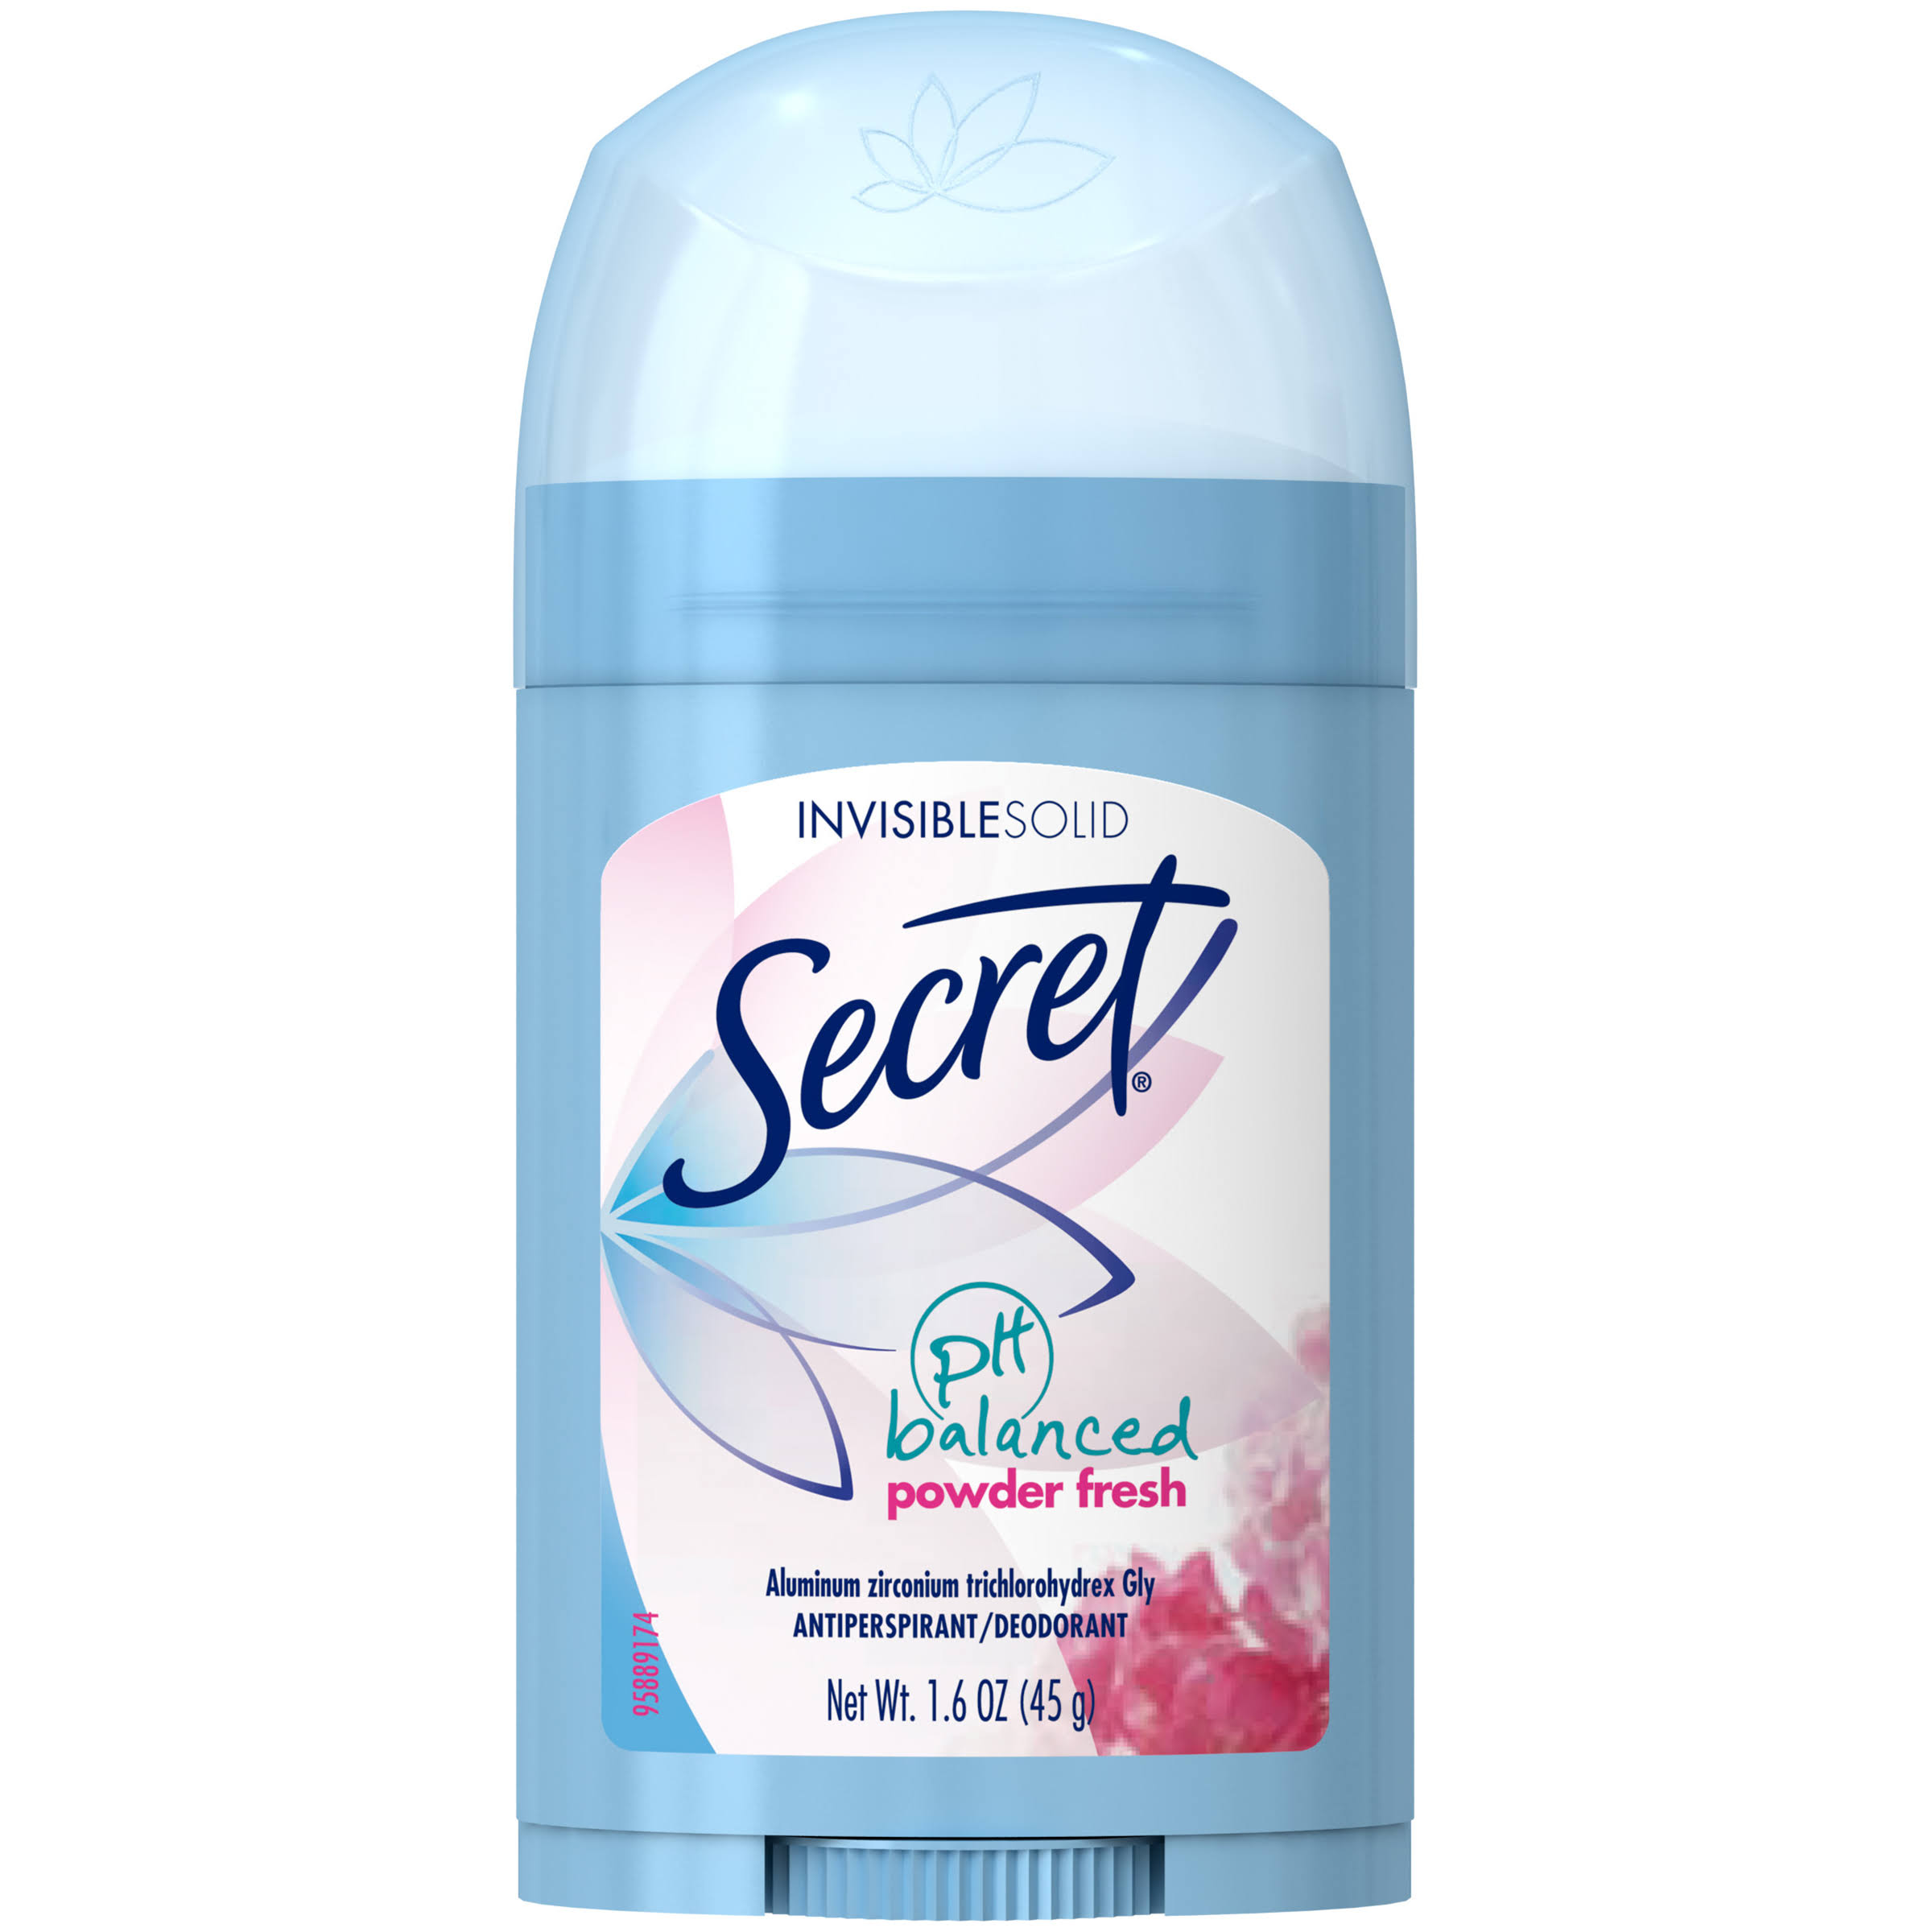 Secret Antiperspirant Deodorant - 1.6oz, Powder Fresh